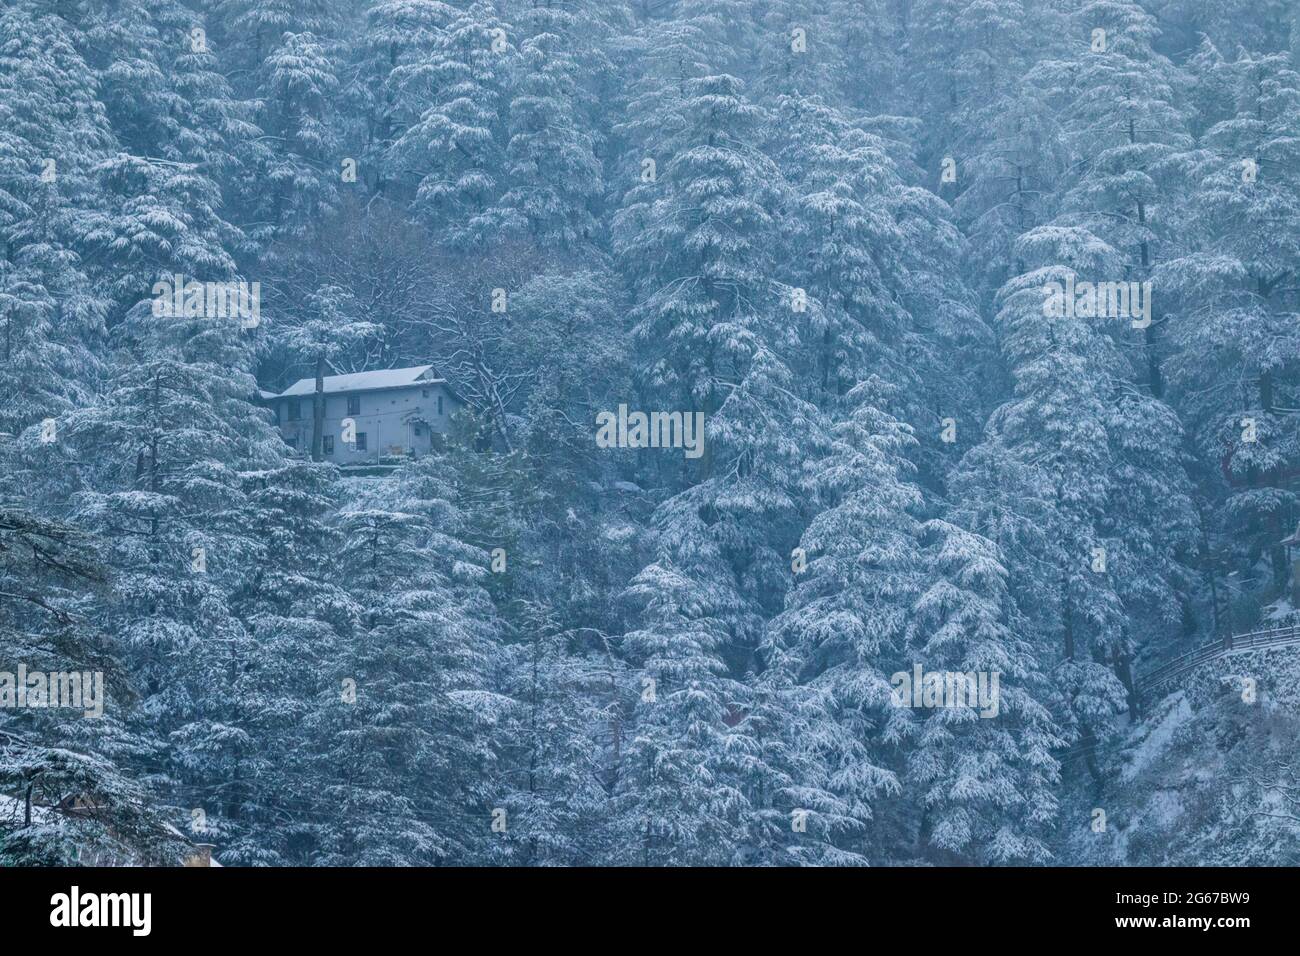 Latest views of Snowfall in Shimla Stock Photo